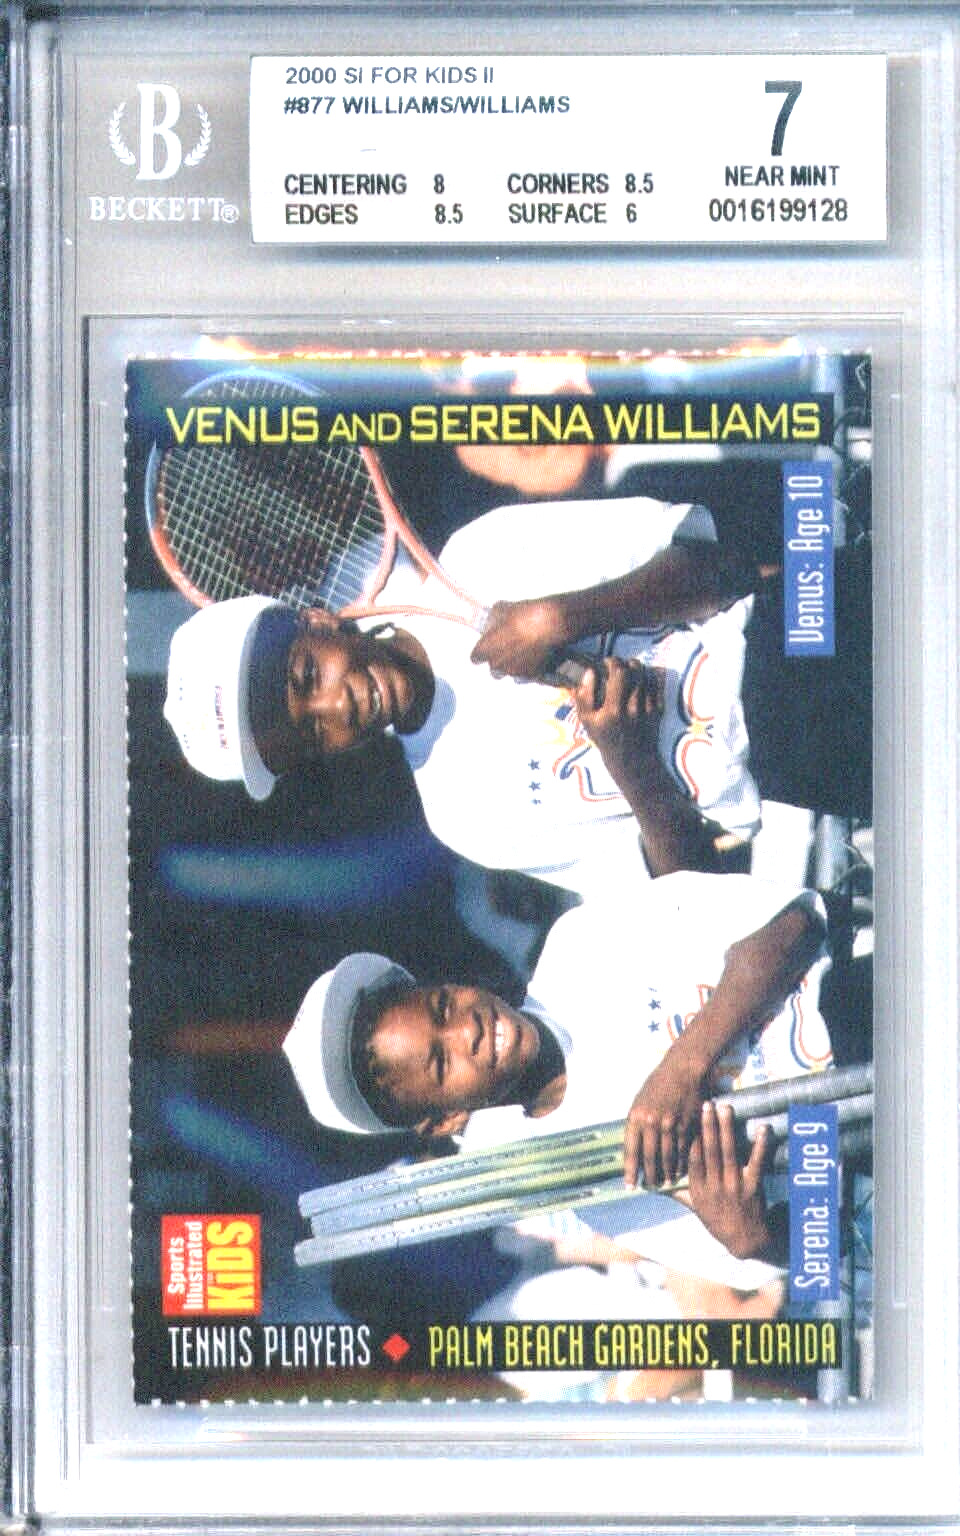 2000 SI For Kids II #877 - Serena and Venus Williams RC BGS 7 Near Mint Rookie!!